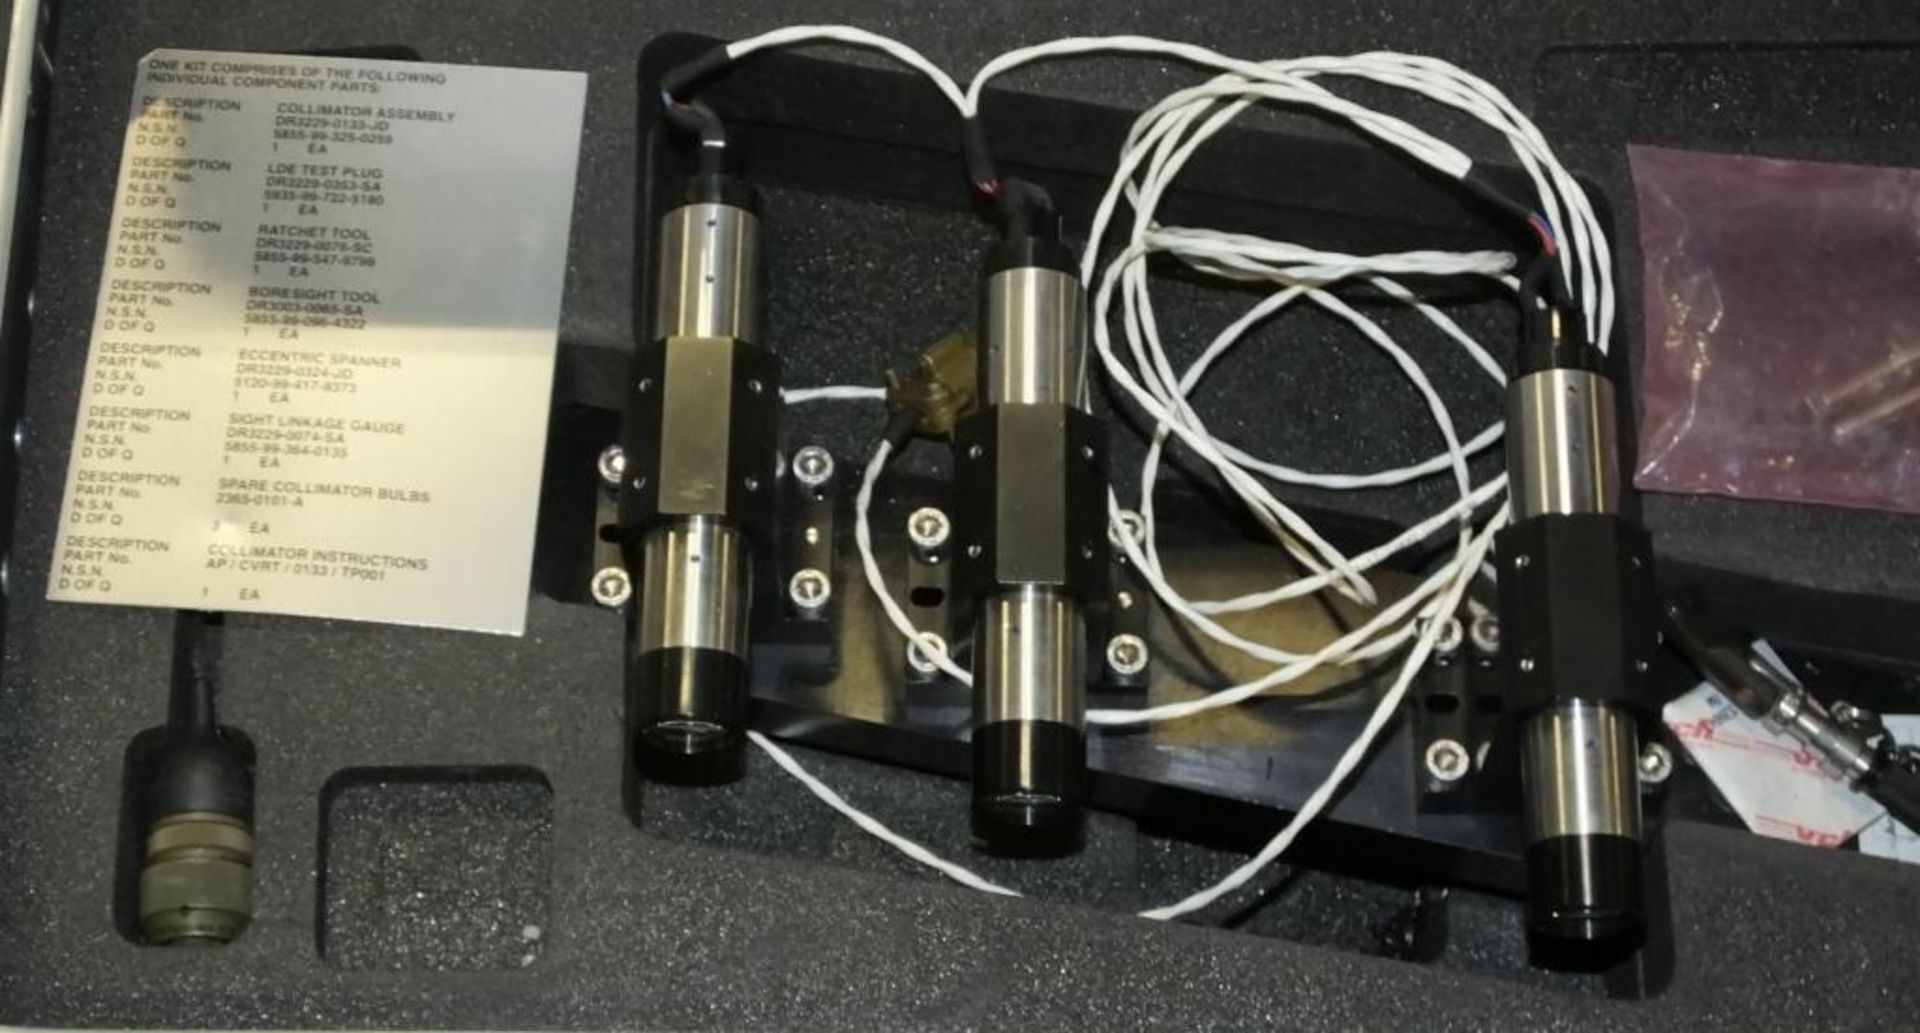 Spire Laser Test Set NSN 5855-99-748-0496, Colimator Assembly Kit in transit cases - Image 8 of 8